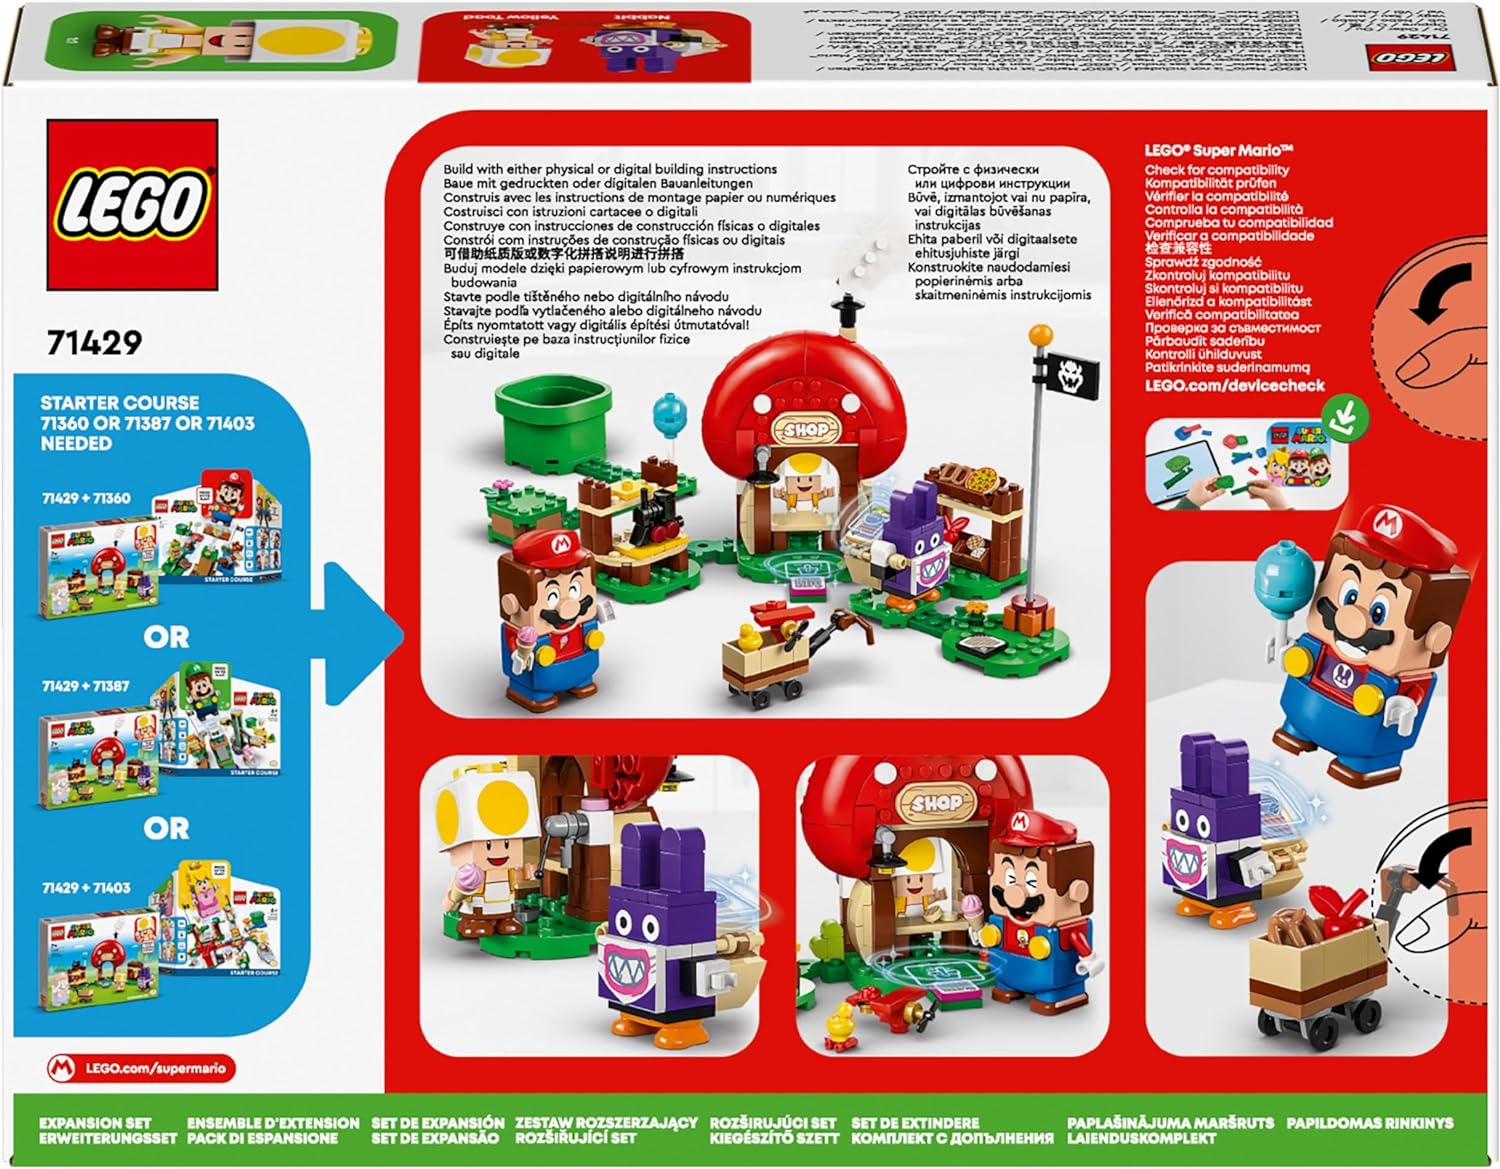 Lego 71429 Nabbit the Toads Shop